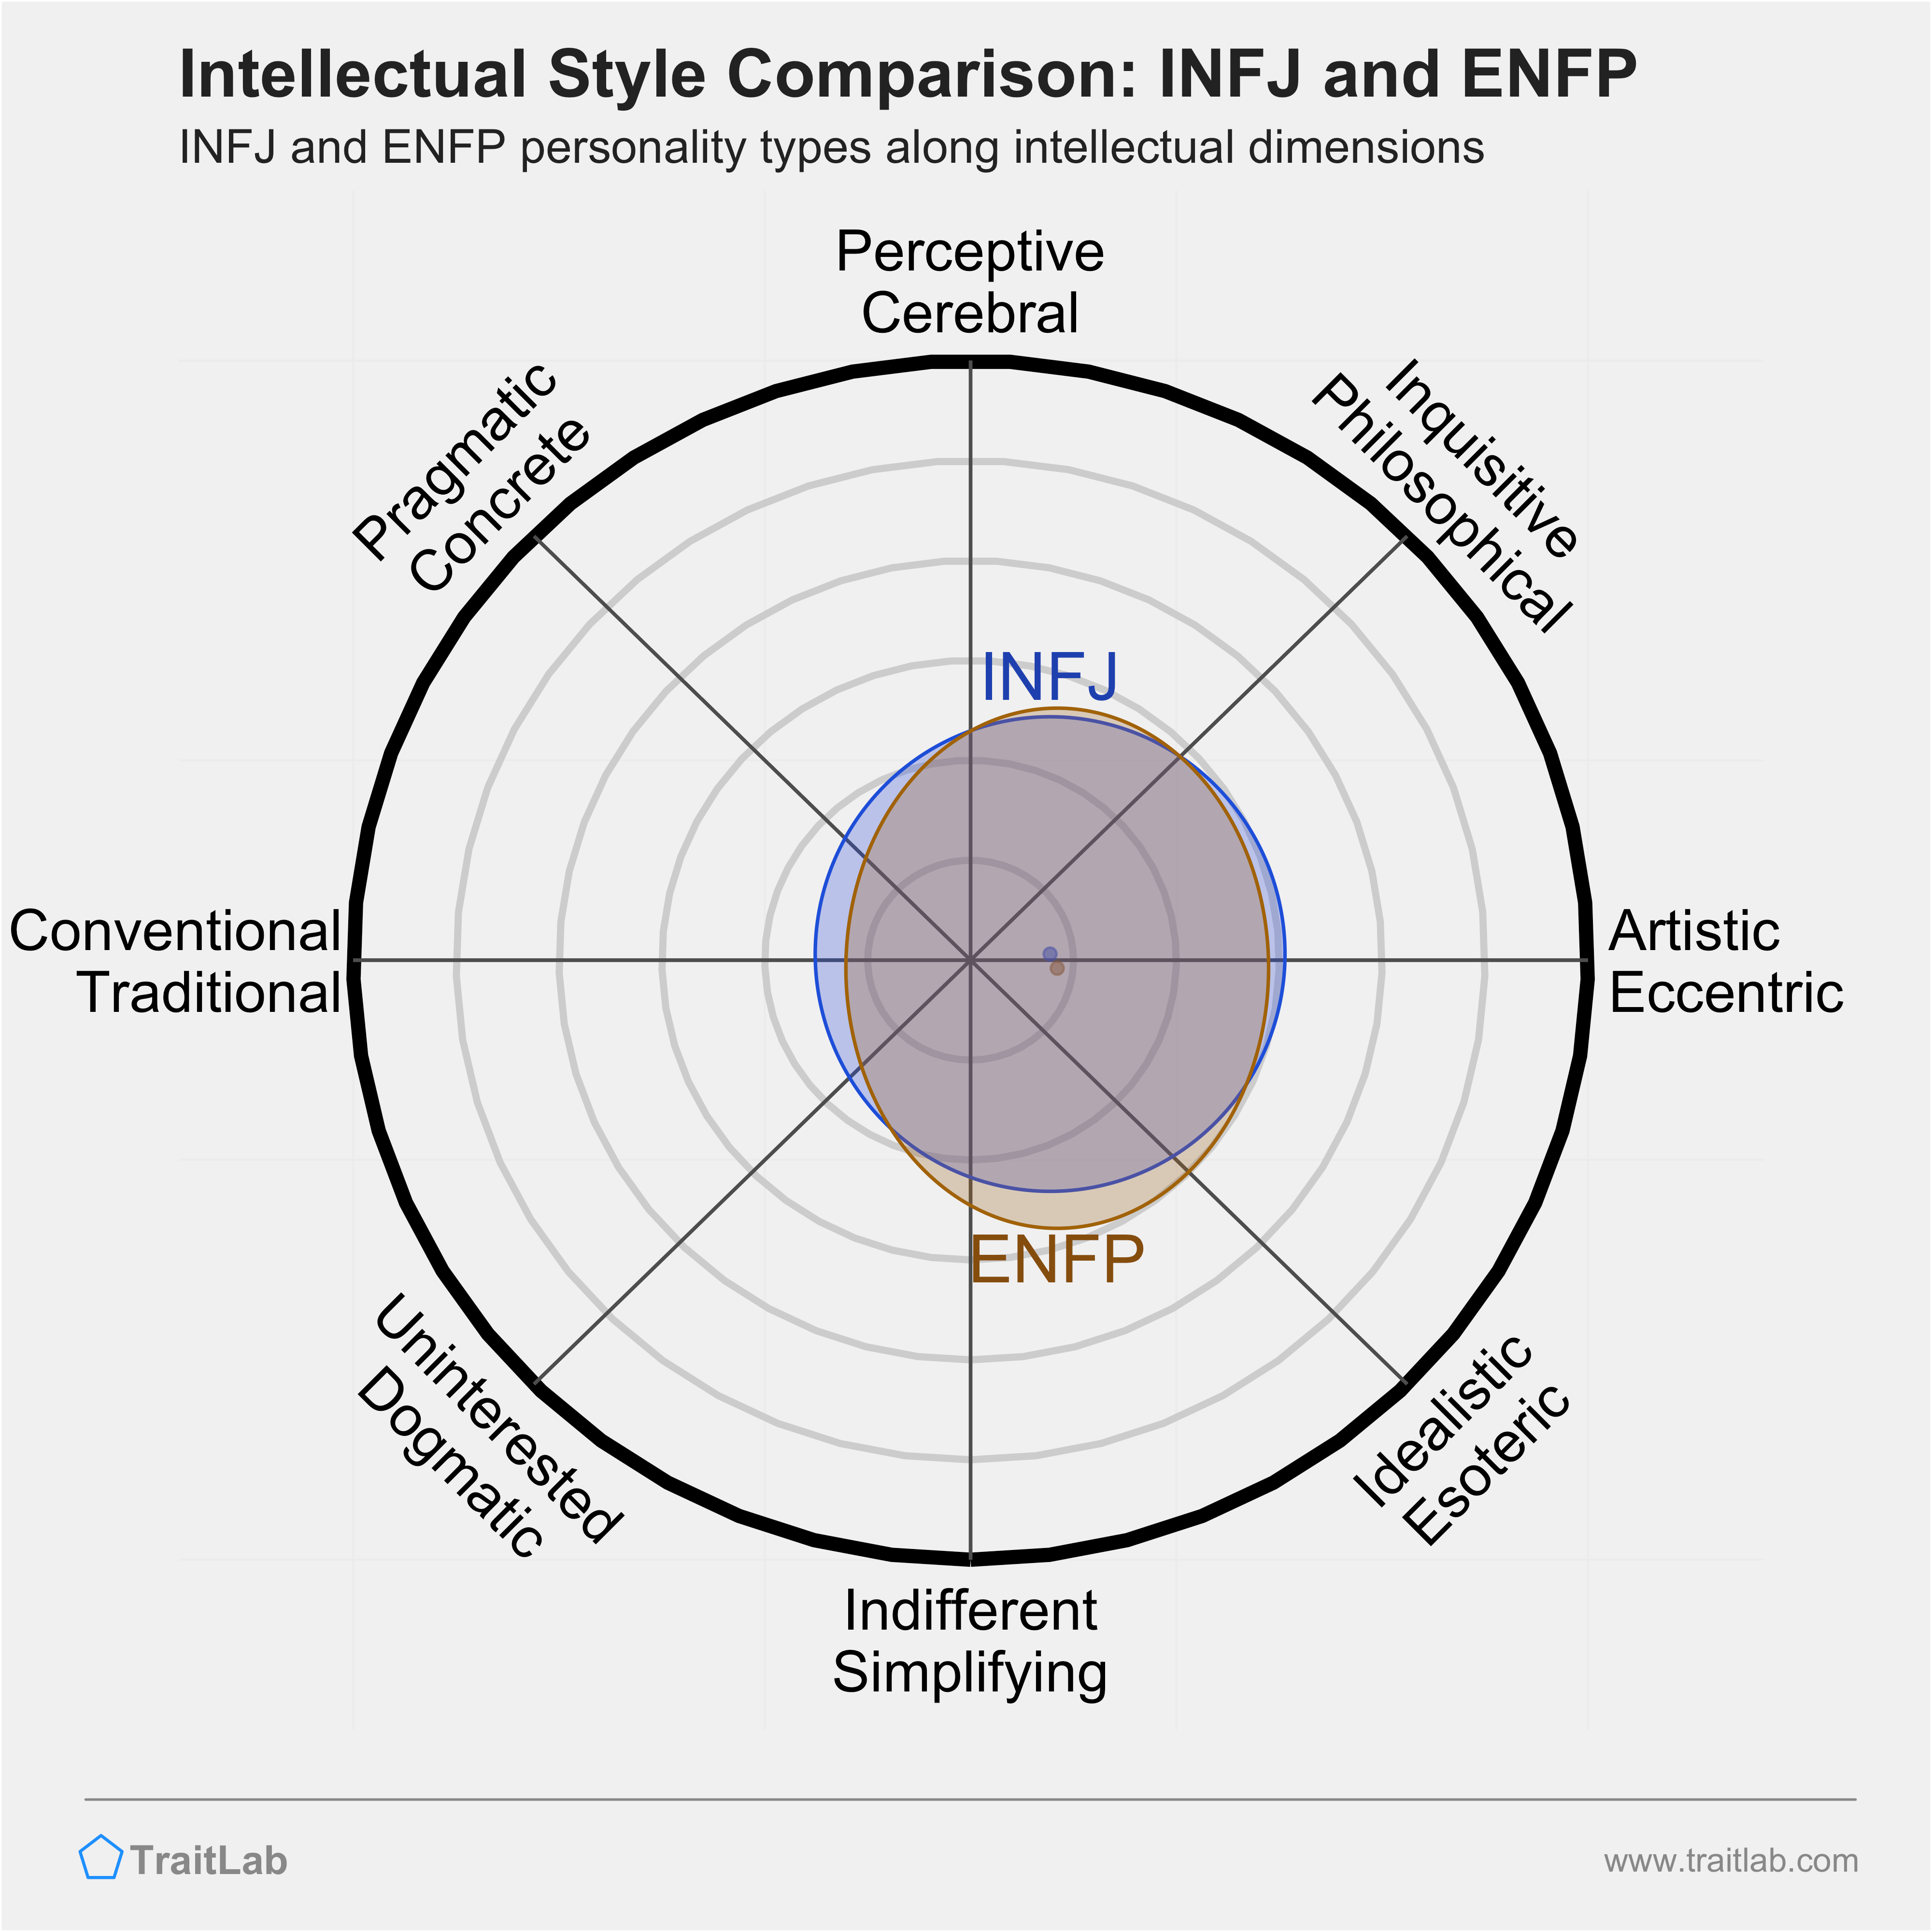 INFJ and ENFP comparison across intellectual dimensions